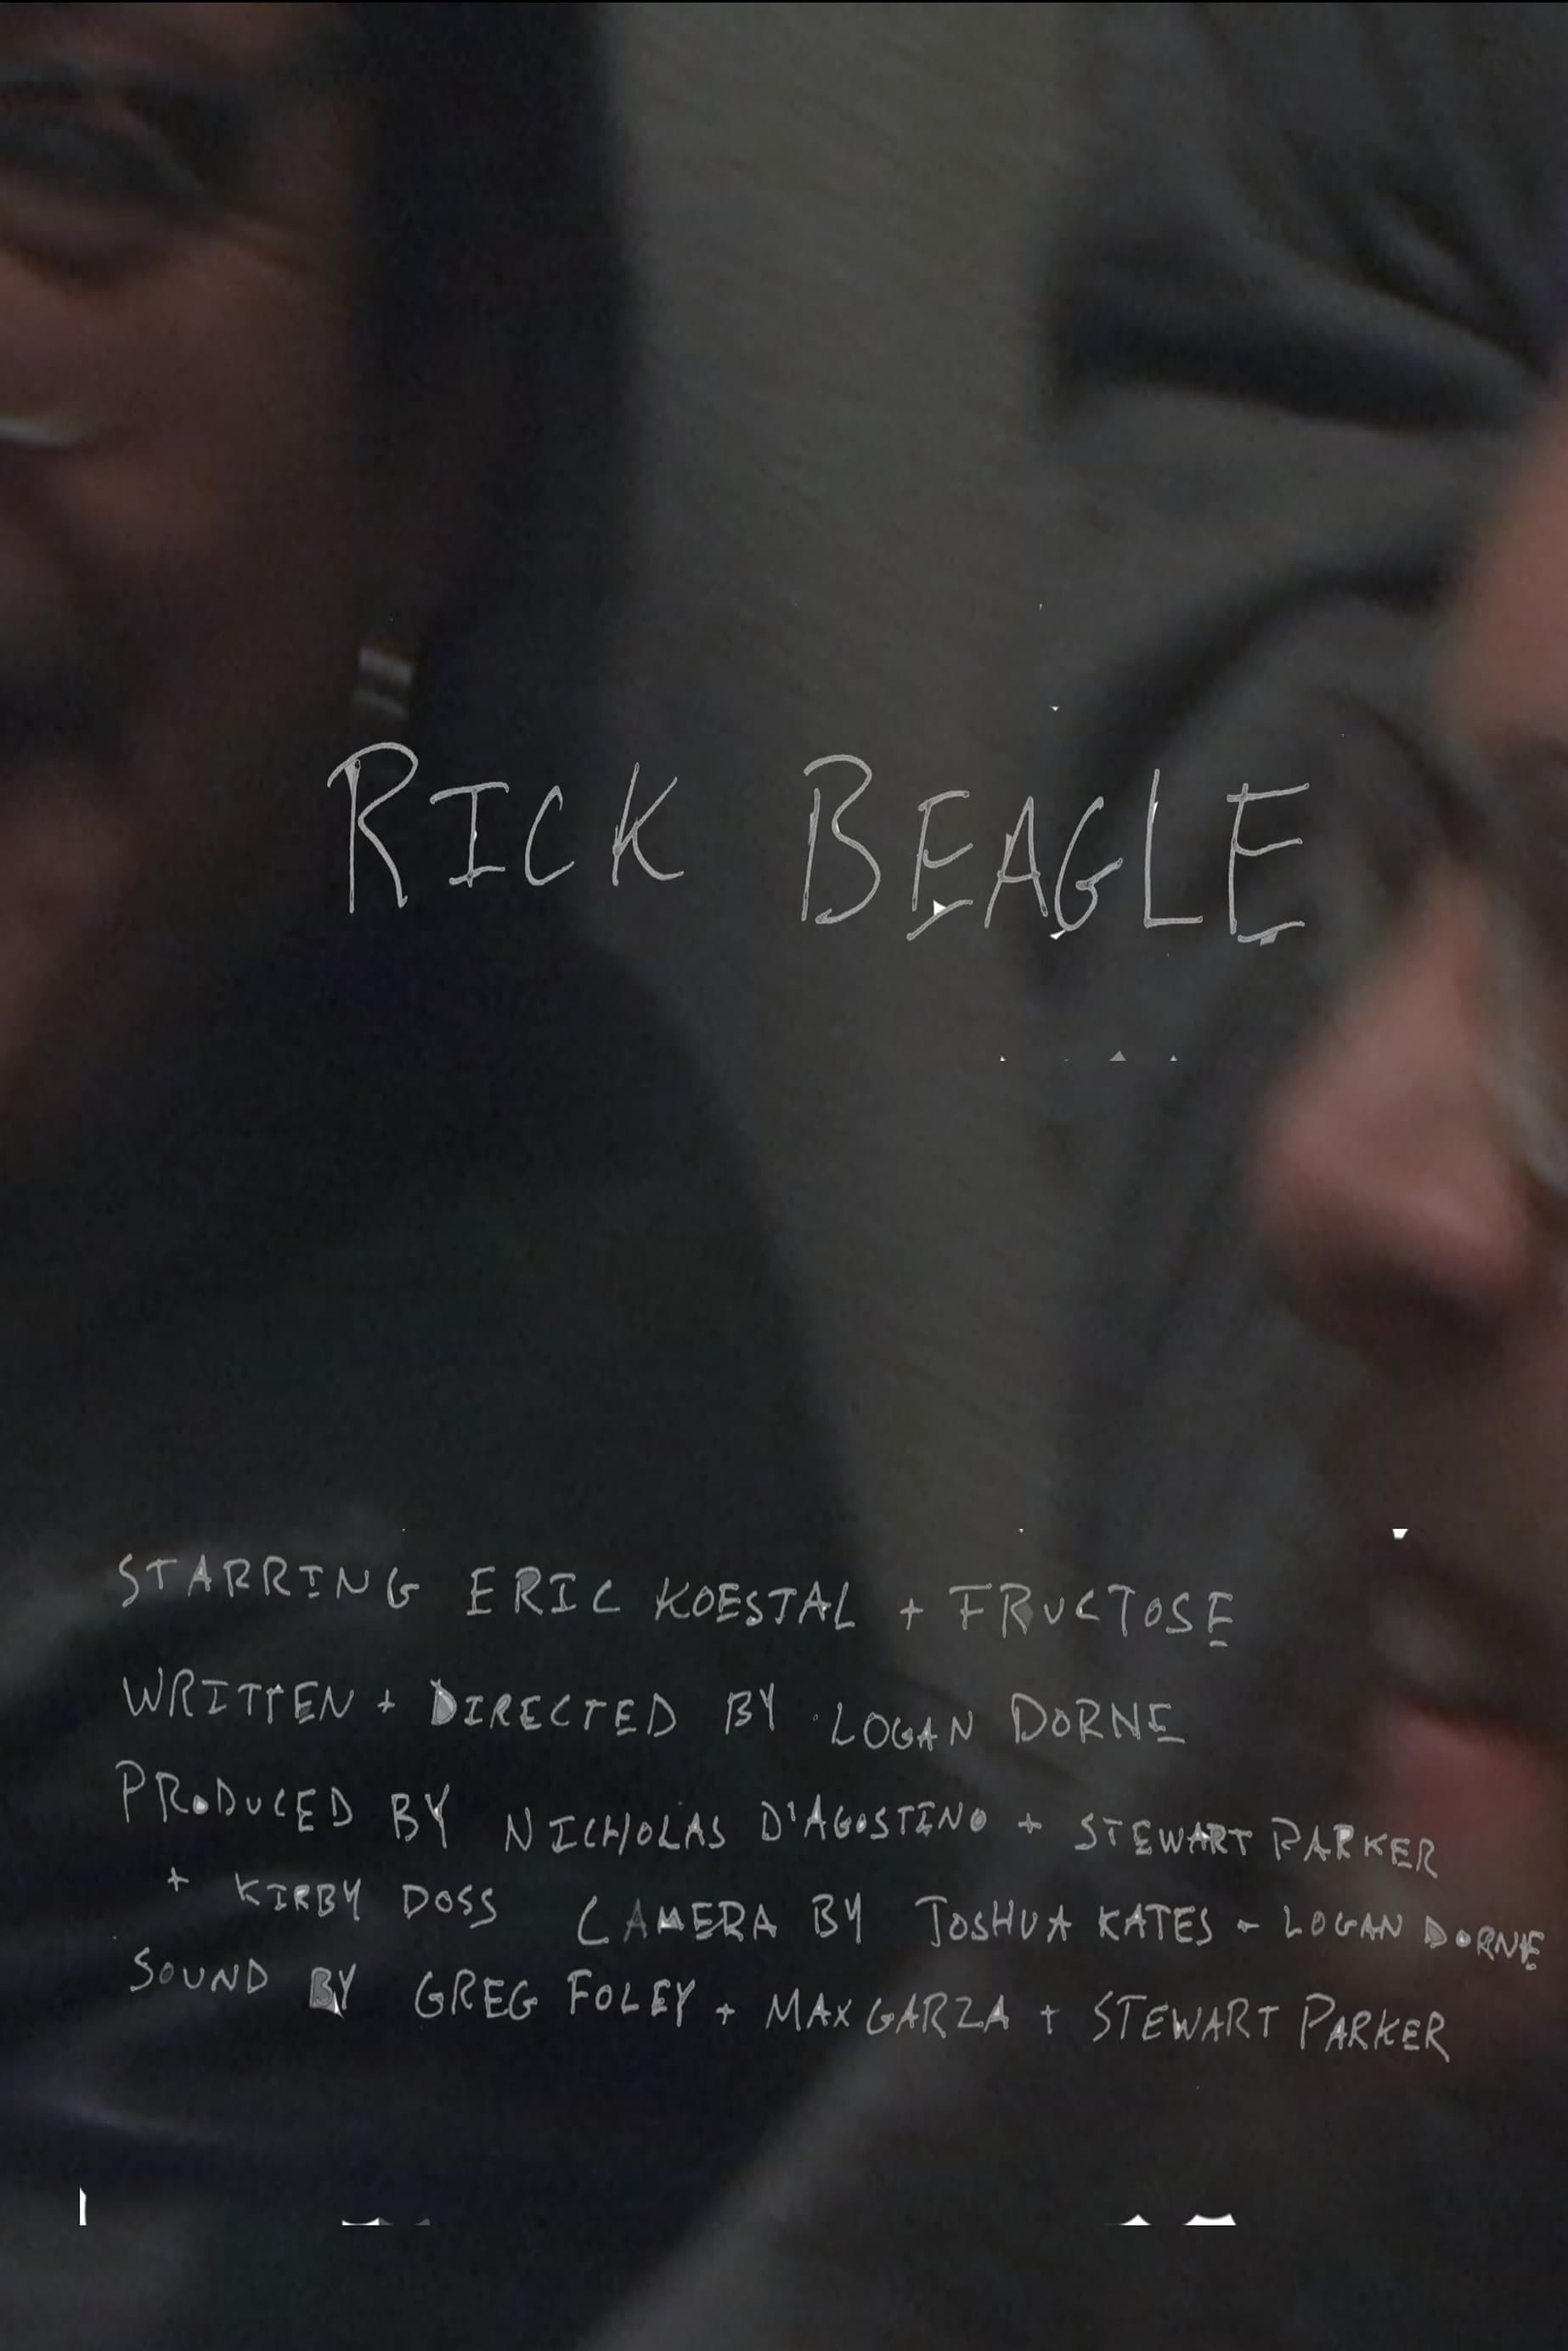 Rick Beagle